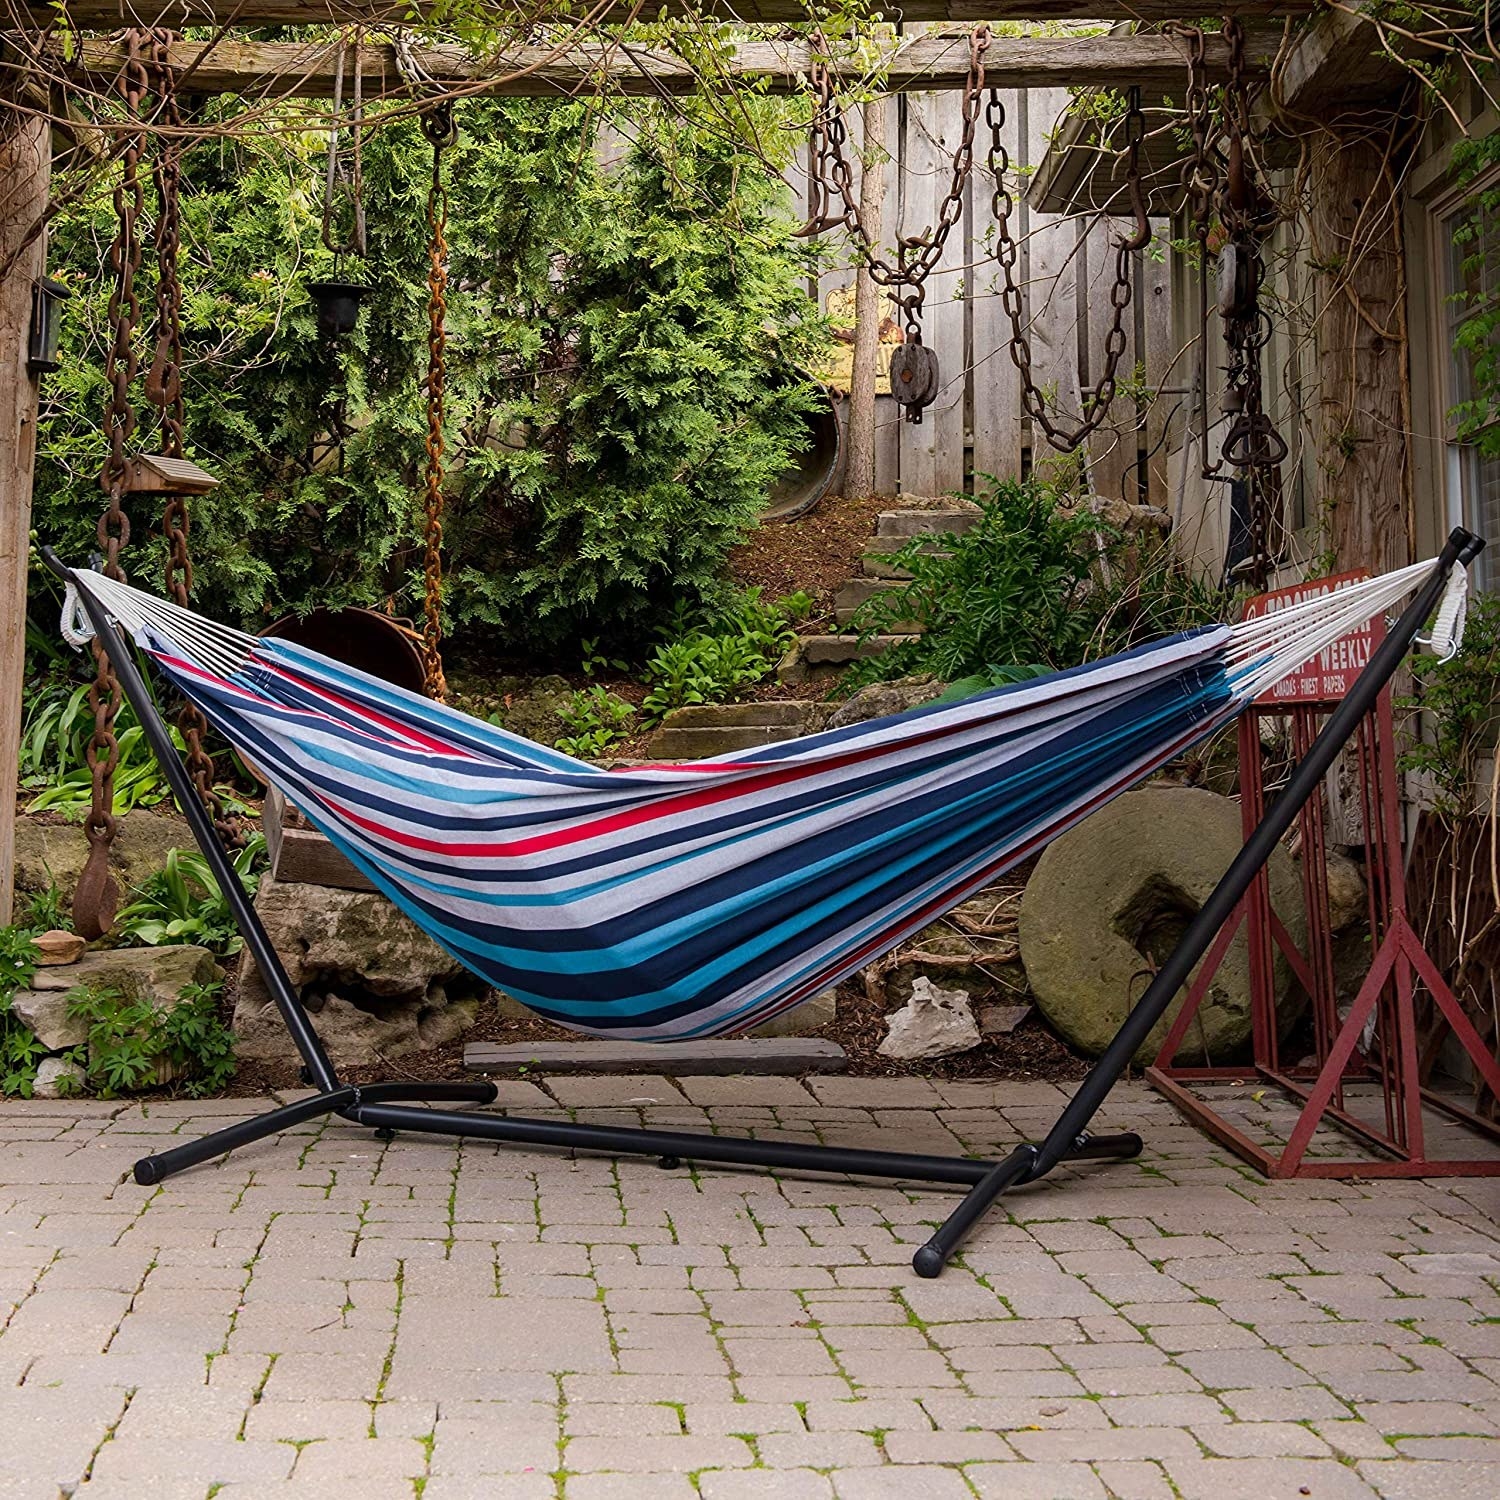 The hammock on a patio